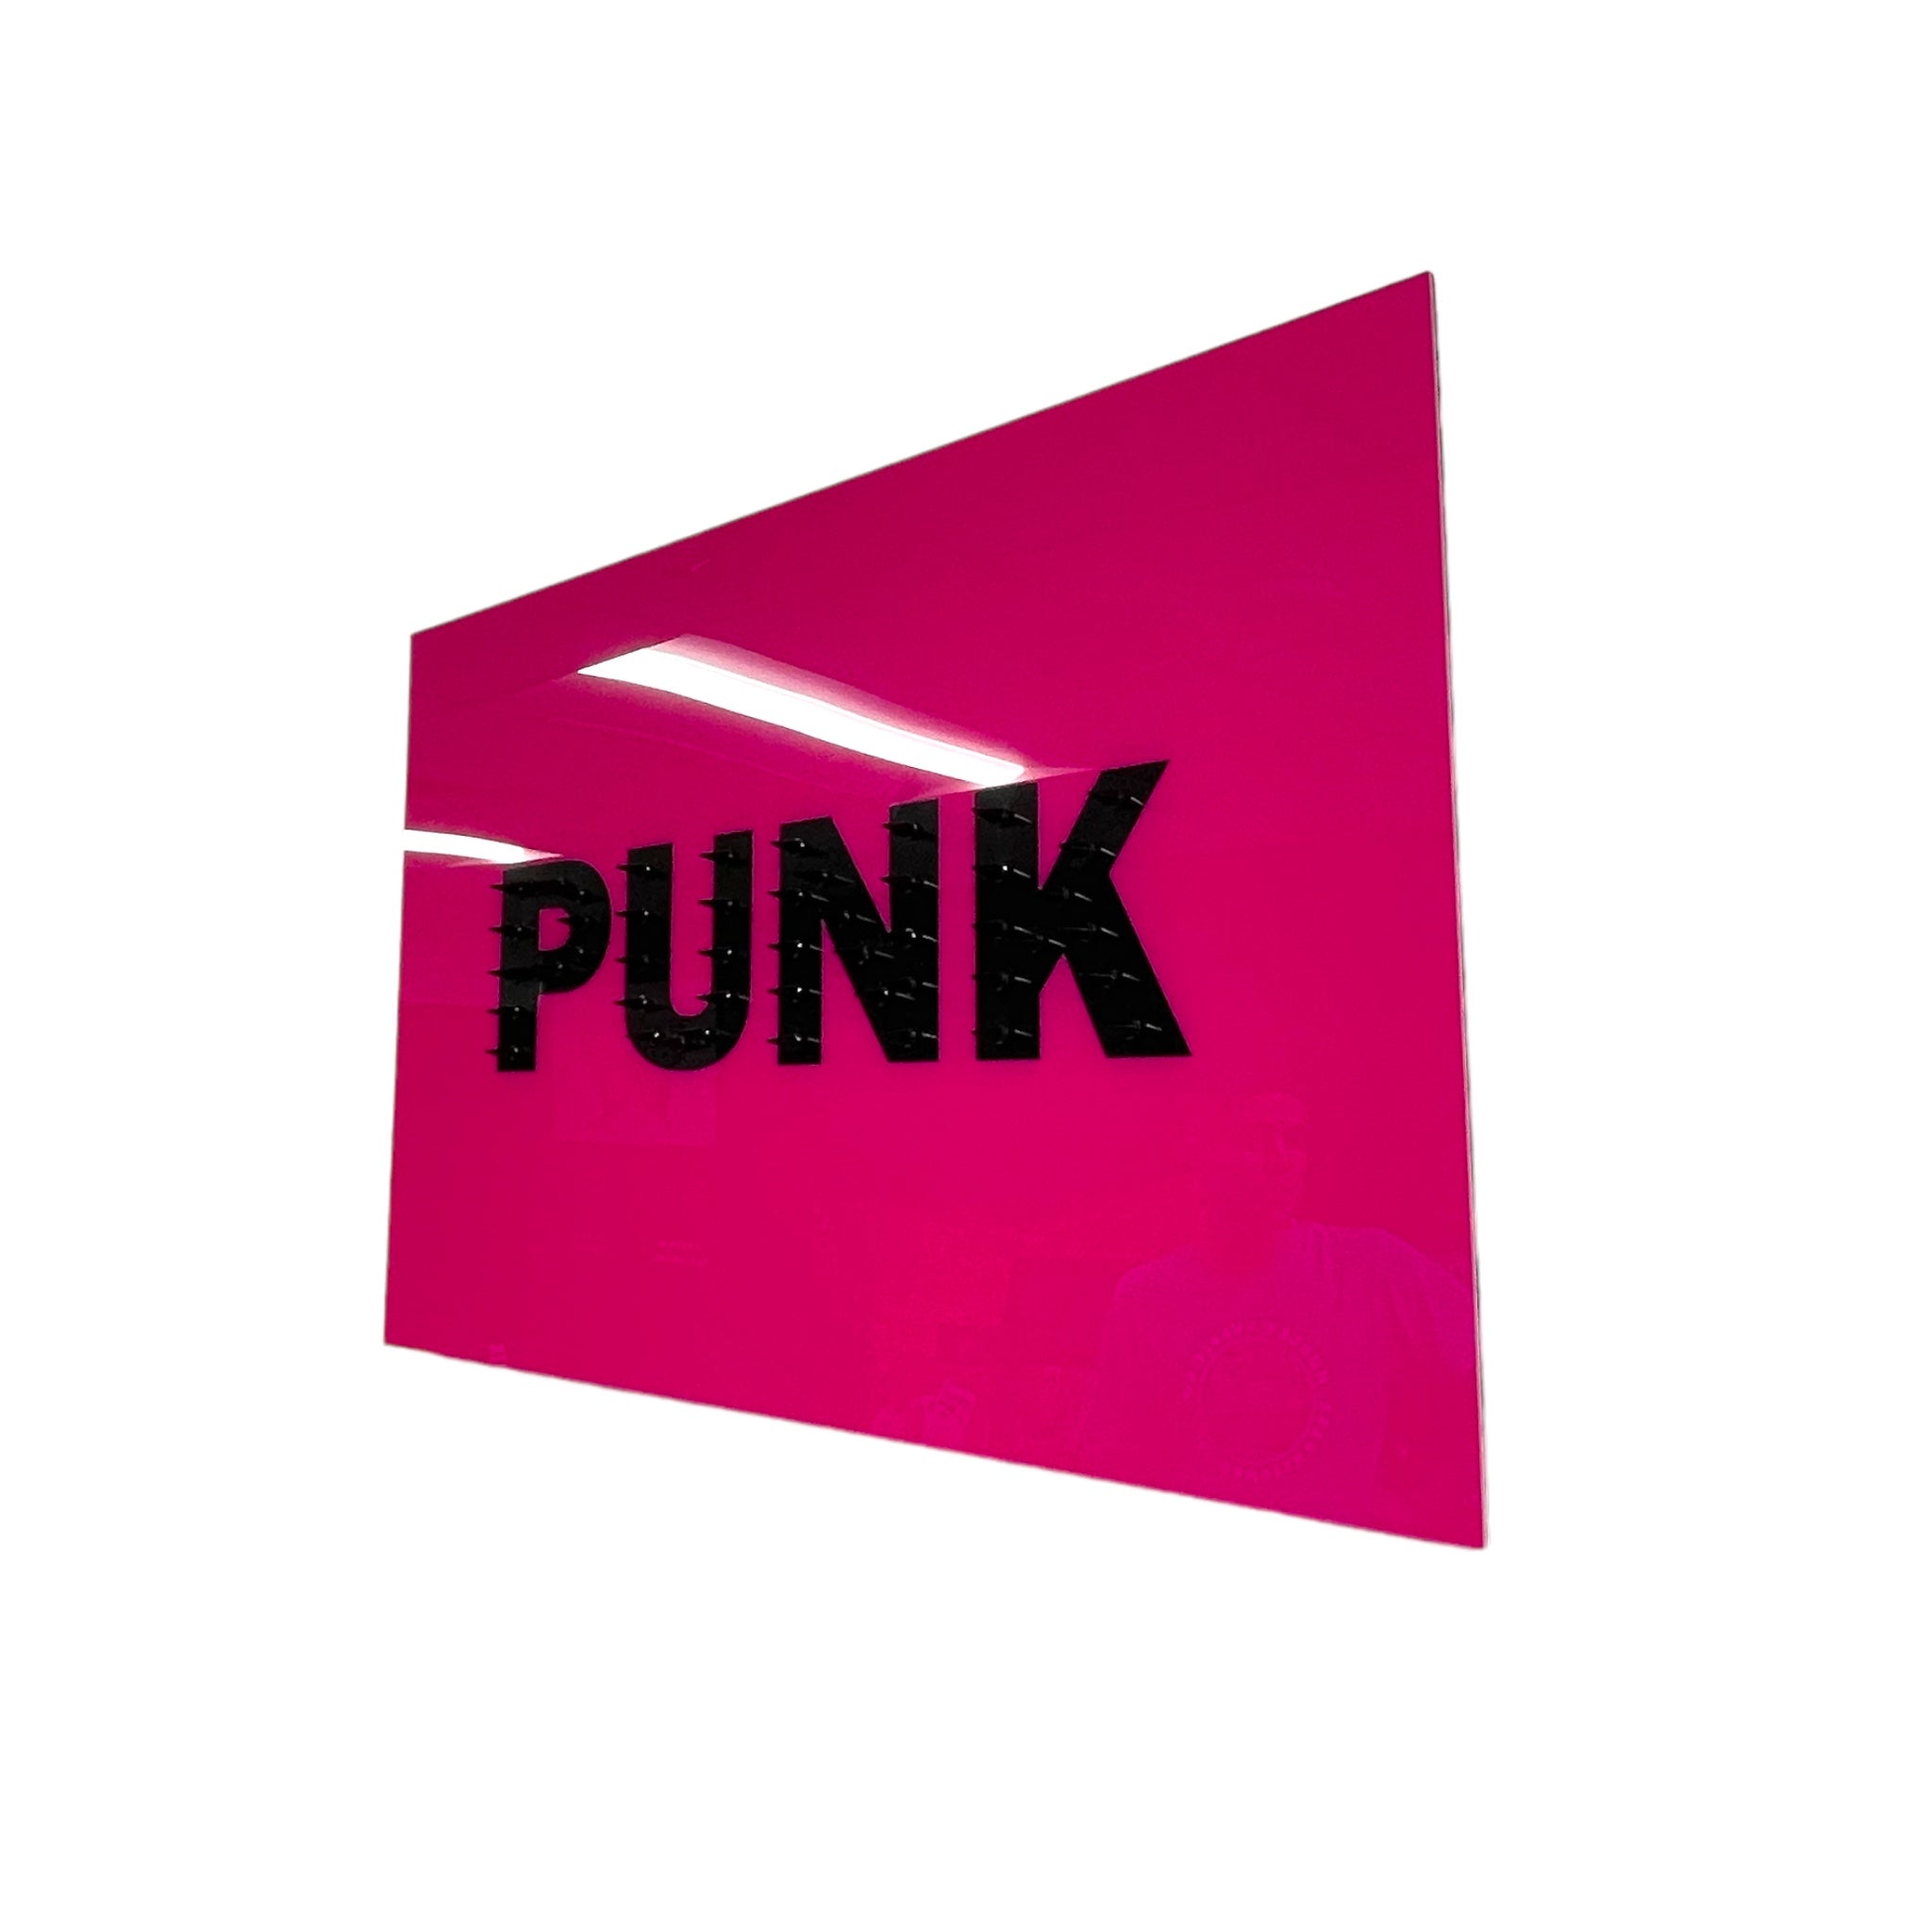 PUNK PINK STUDS CREATIVE ACRYLIC FRAME 20x30